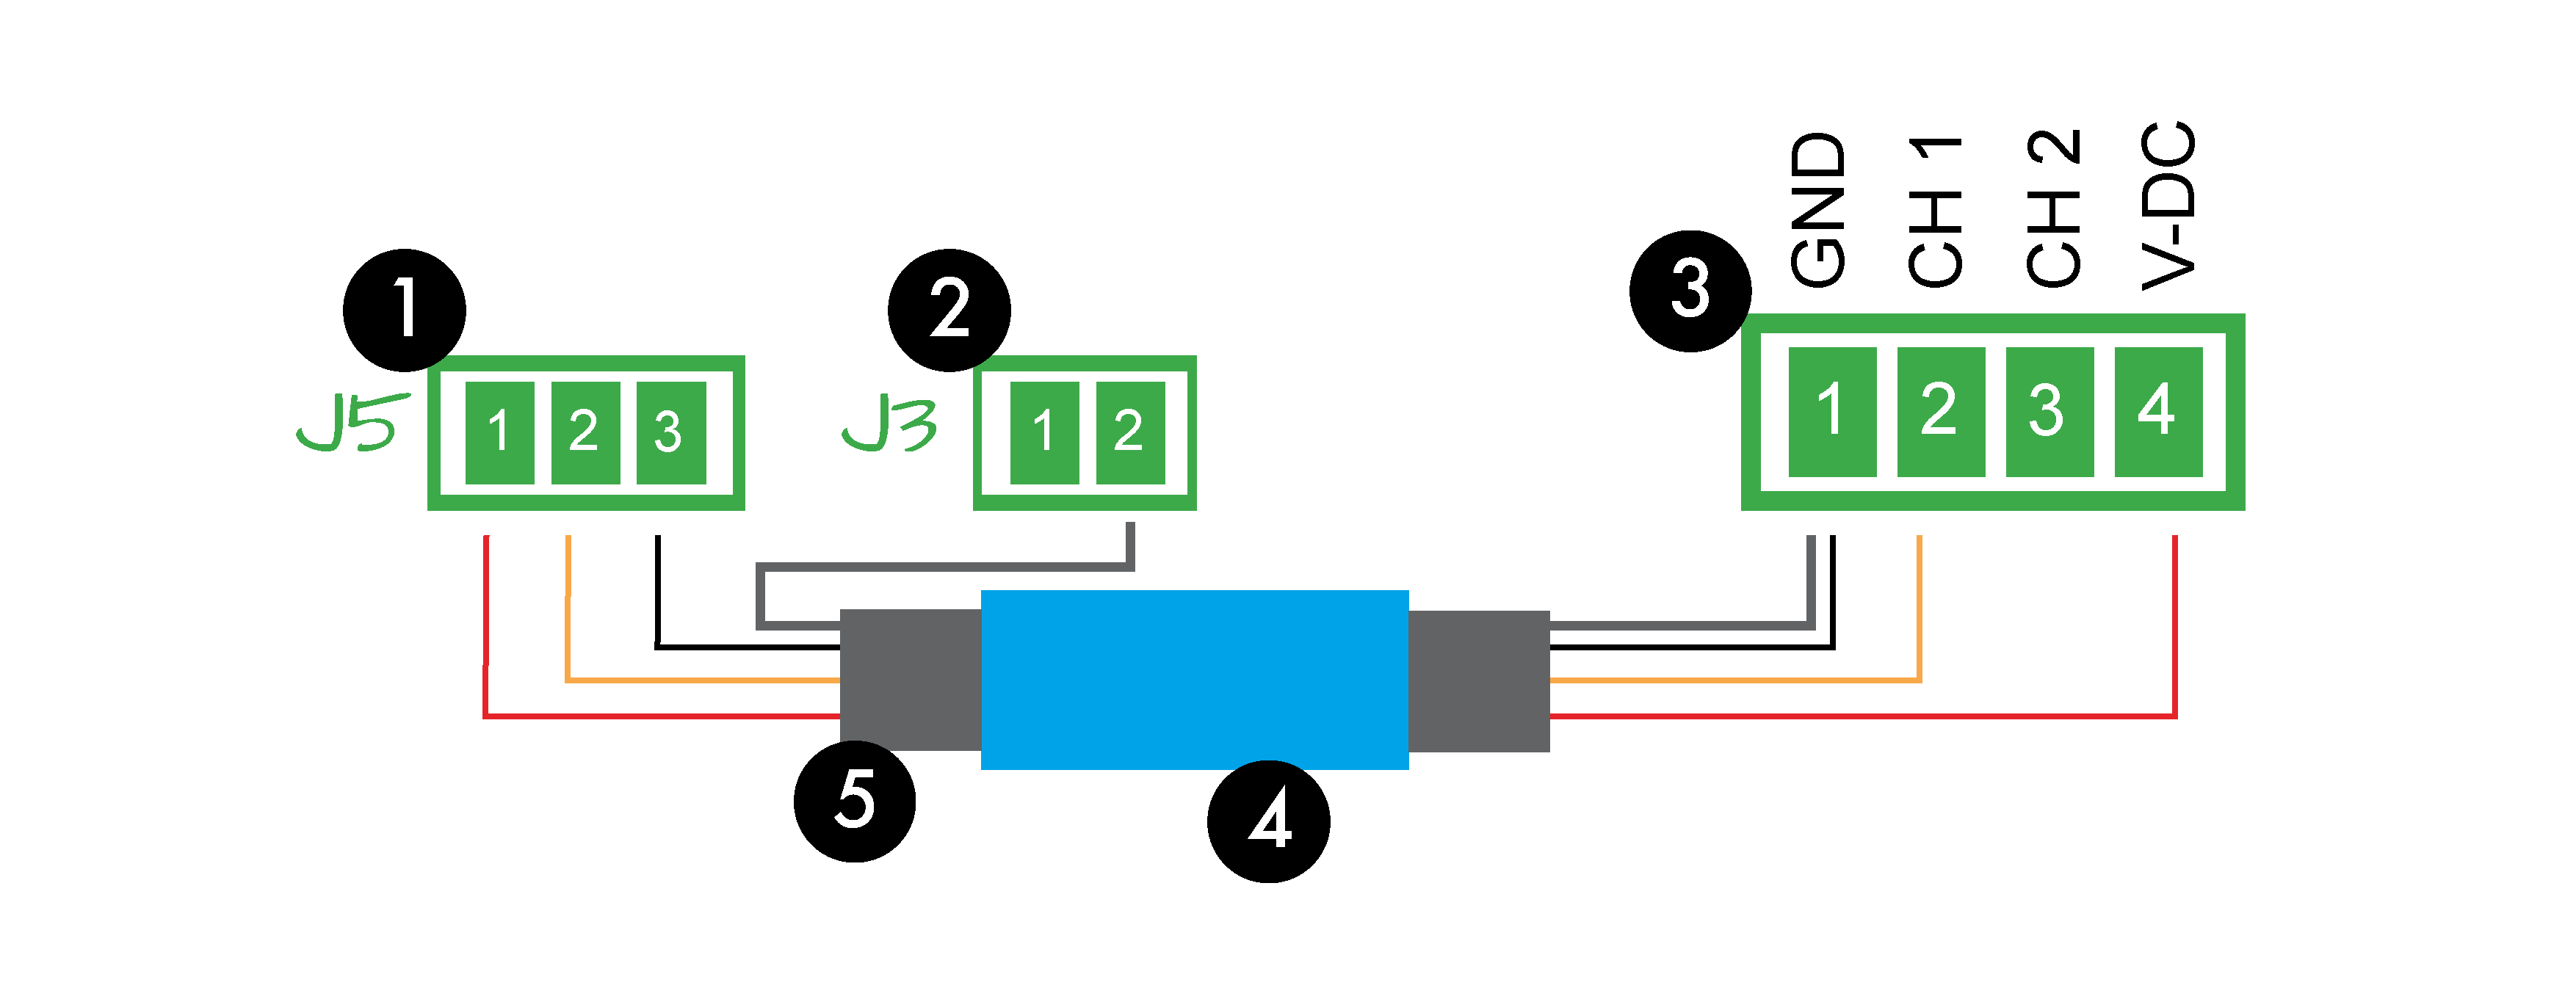 Veeder Root 7671 installation diagram